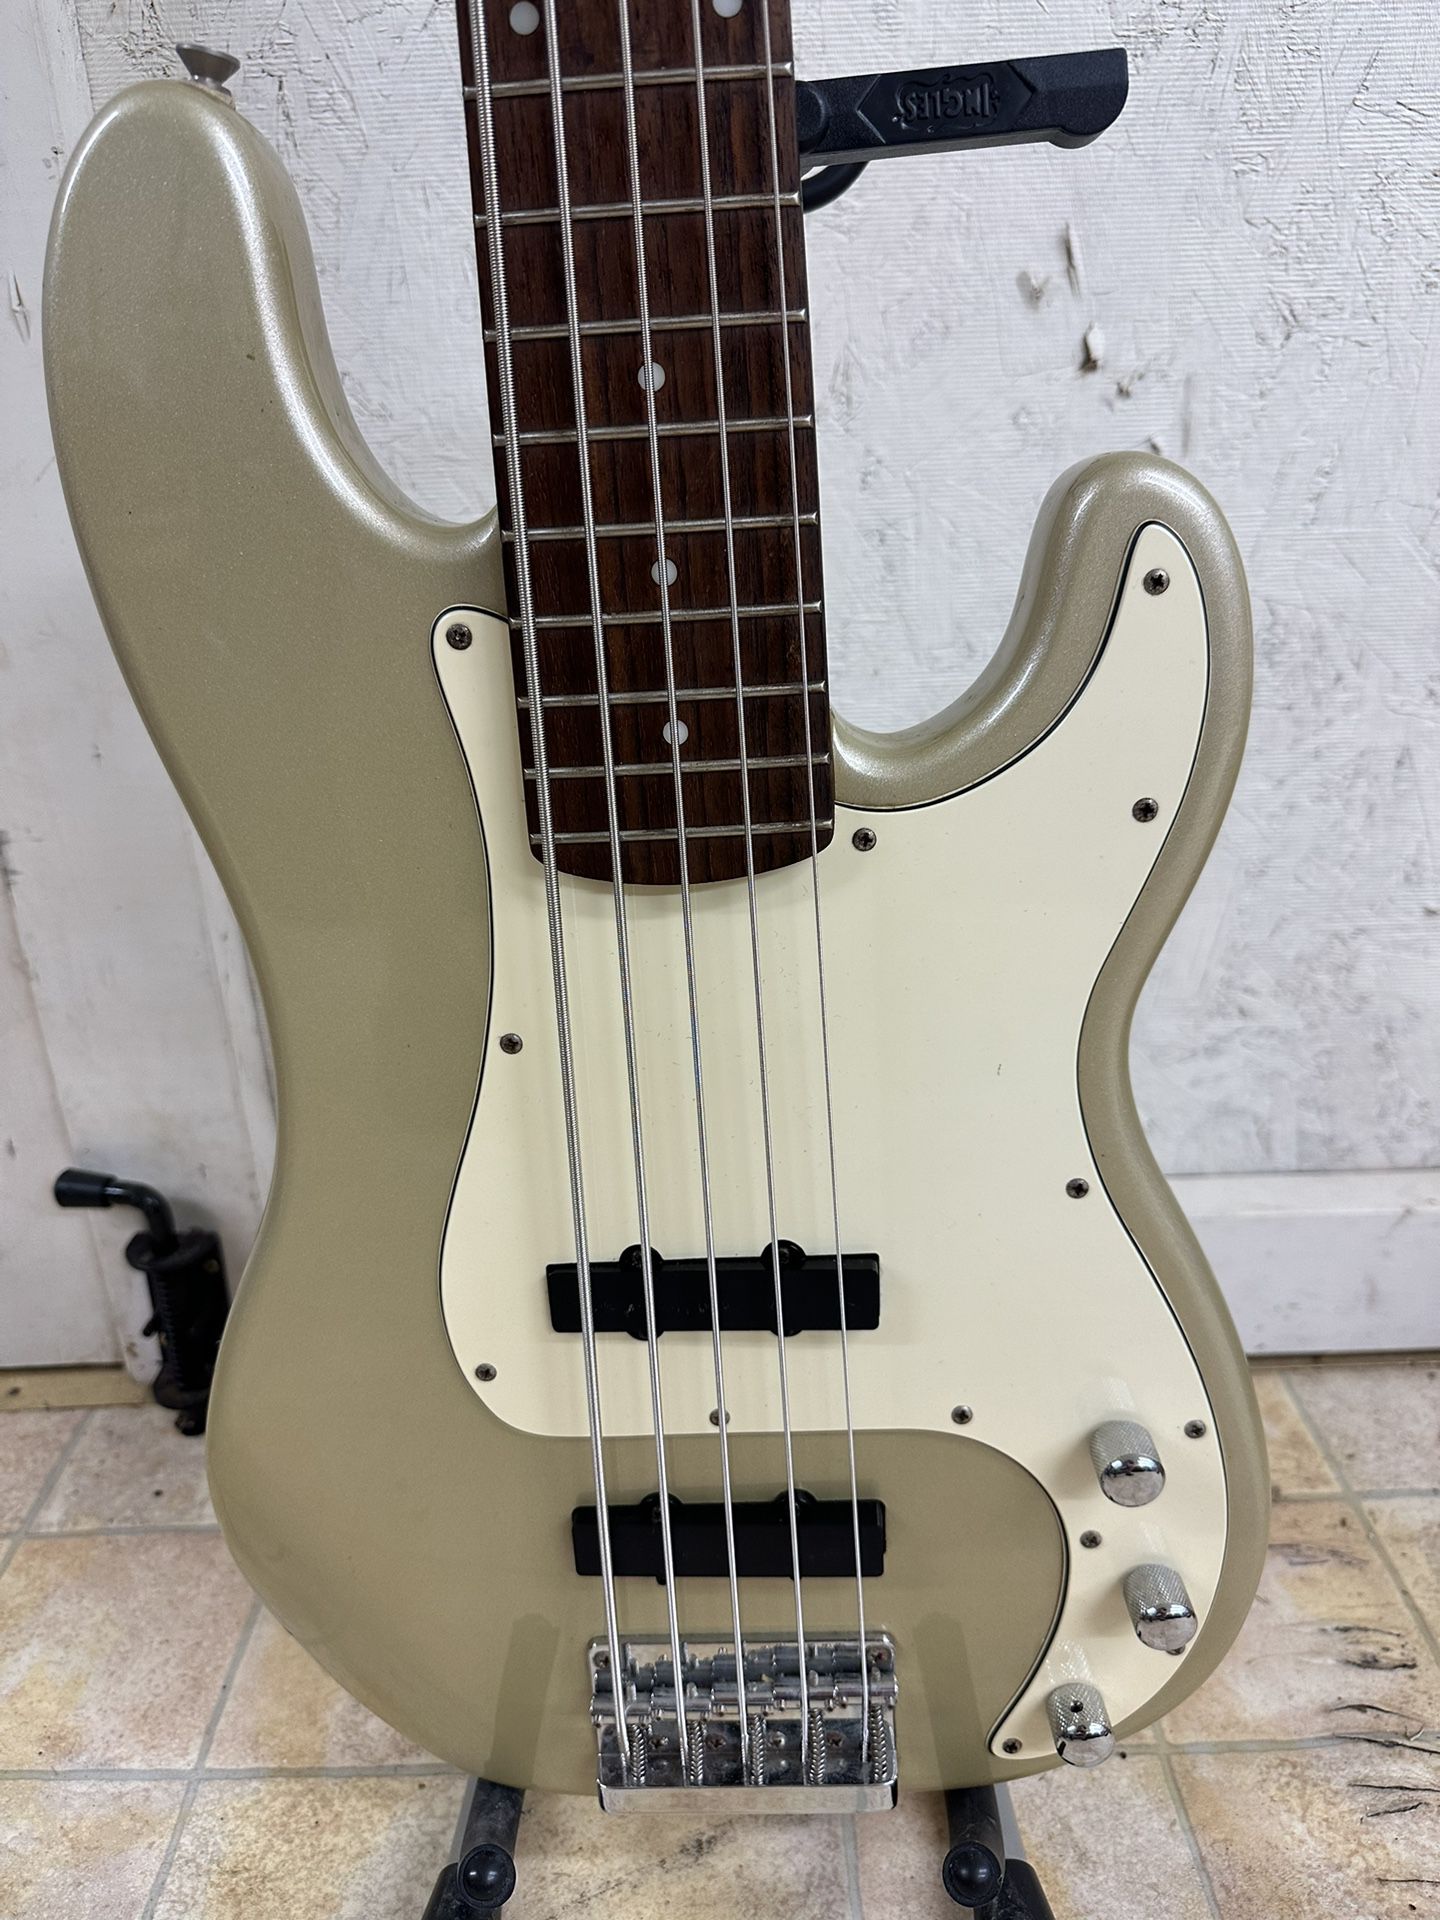 Squire Affinity Precision Bass V Shoreline Gold Electric Bass Guitar $300 Firm